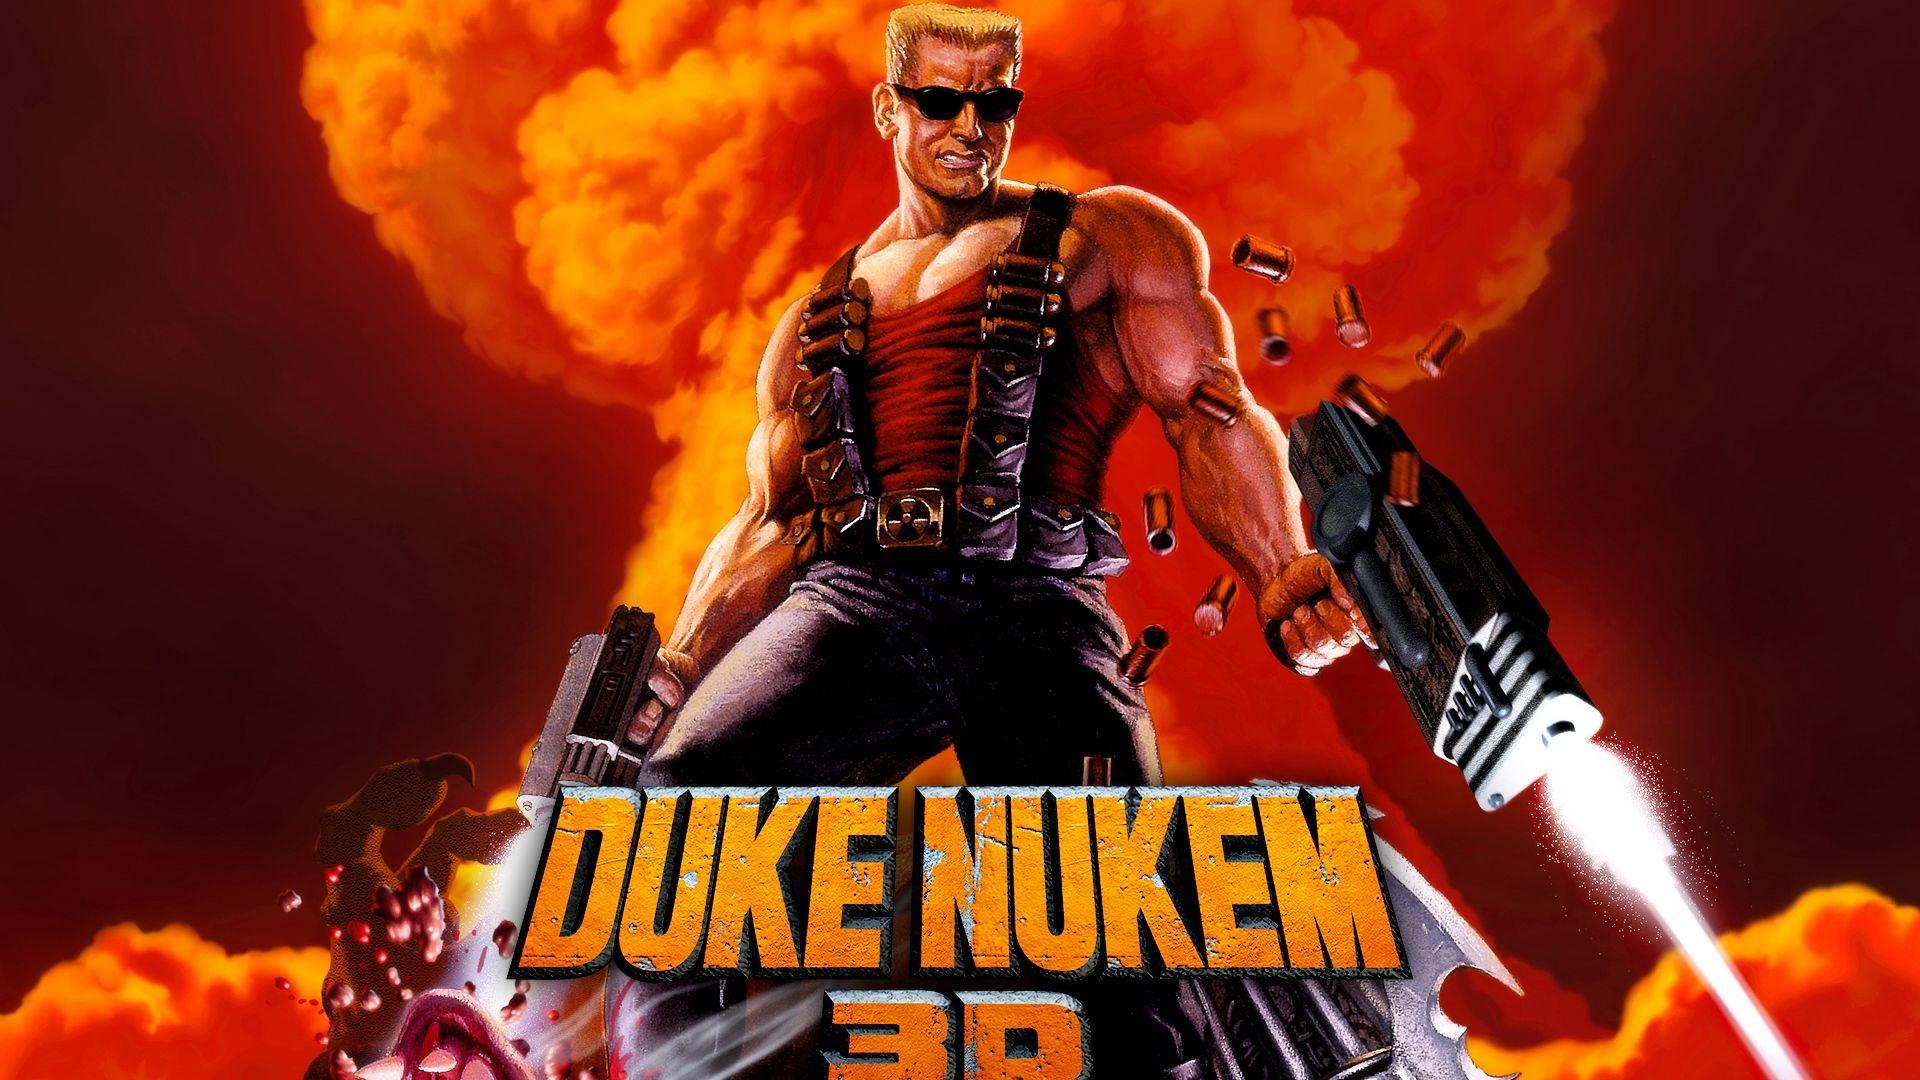 Duke Nukem Wallpapers Top Free Duke Nukem Backgrounds Images, Photos, Reviews